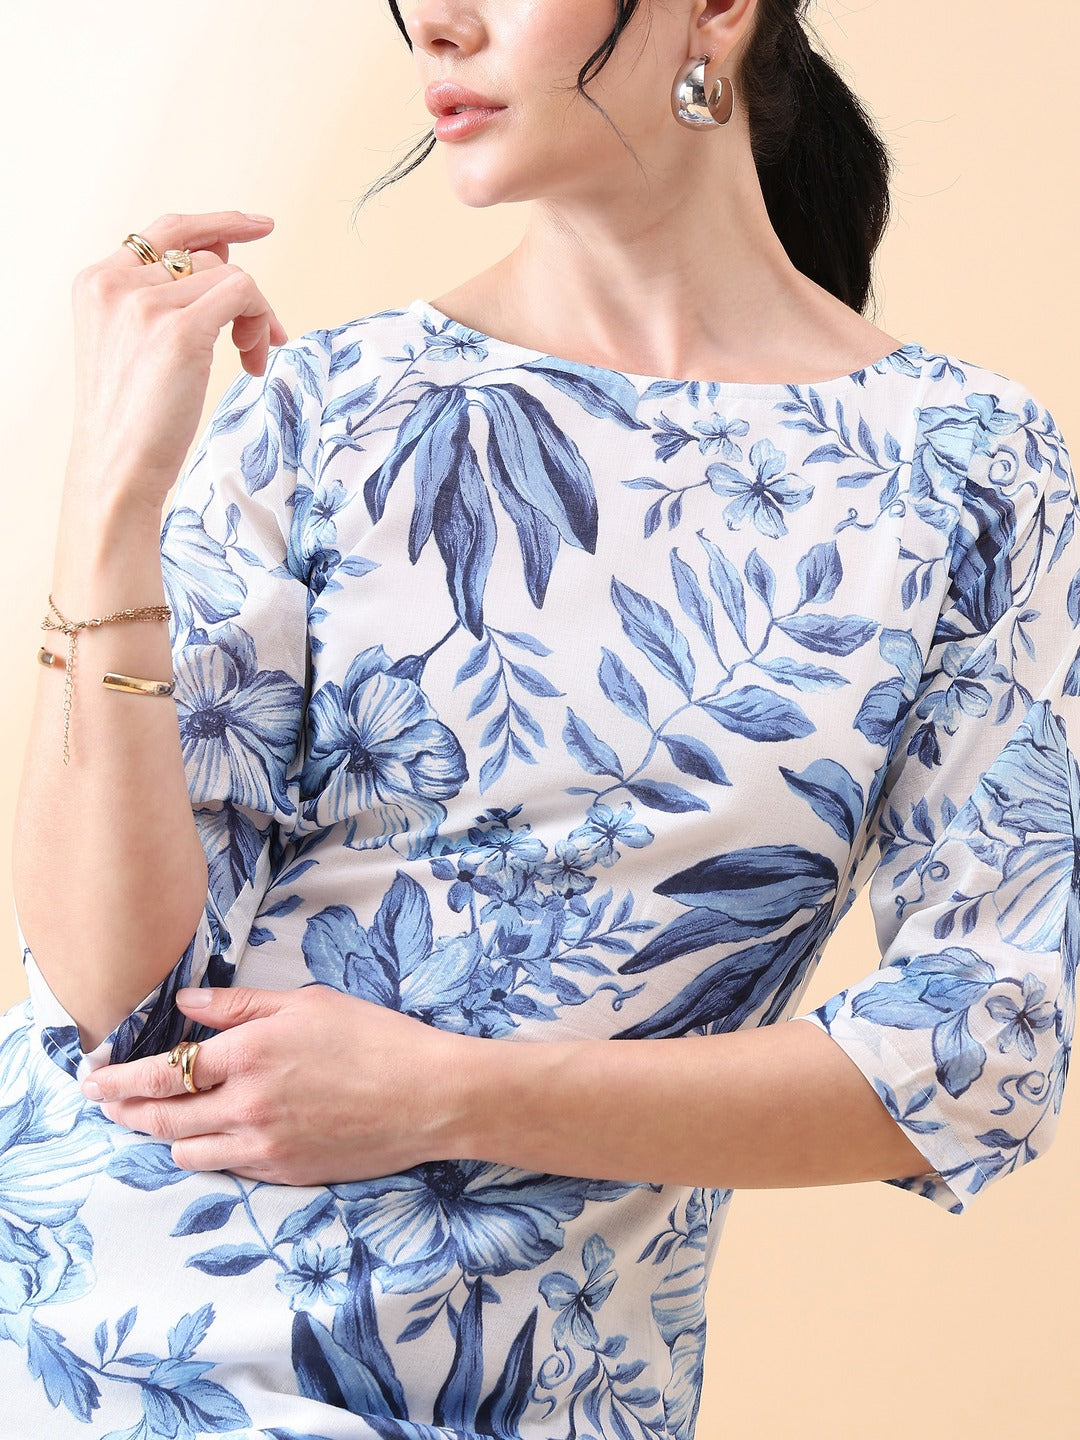 A-Line cotton floral printed dress- BLUE & WHITE